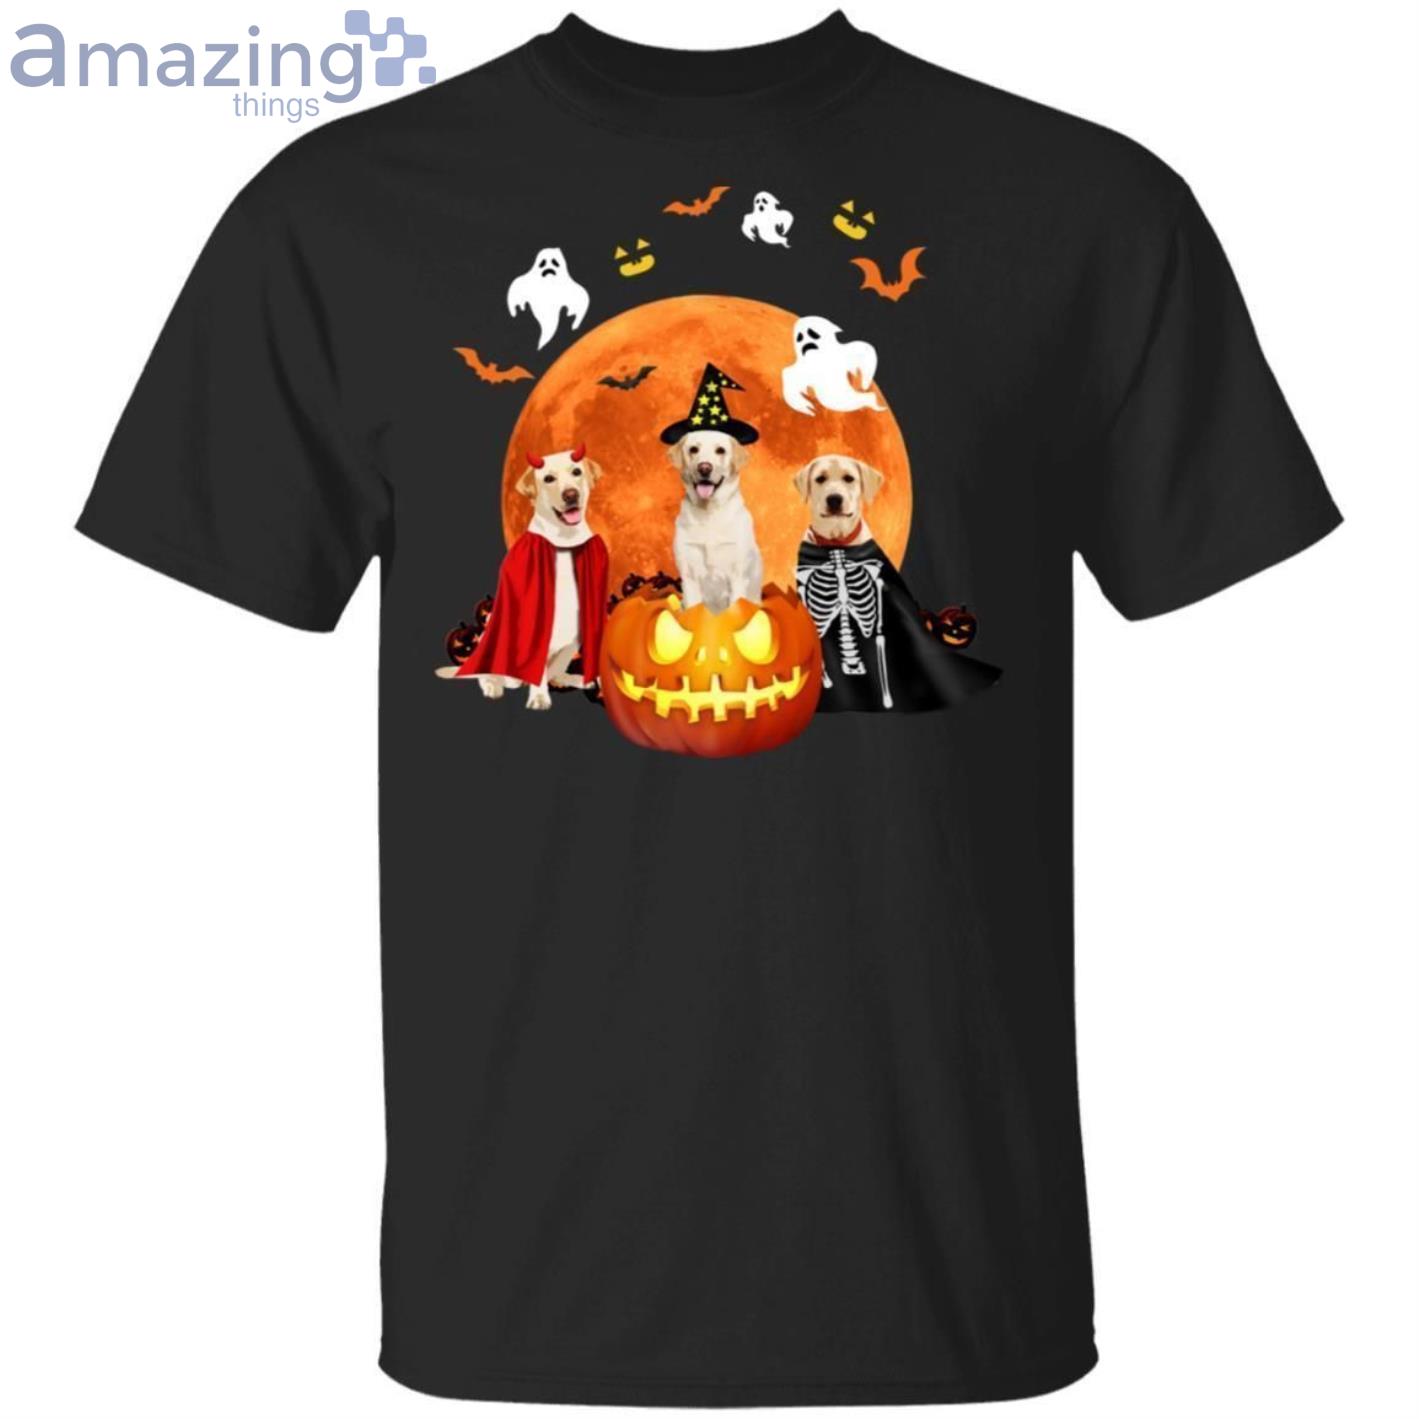 Three Labrador Retrievers And A Pumpkin Halloween T-Shirt Product Photo 1